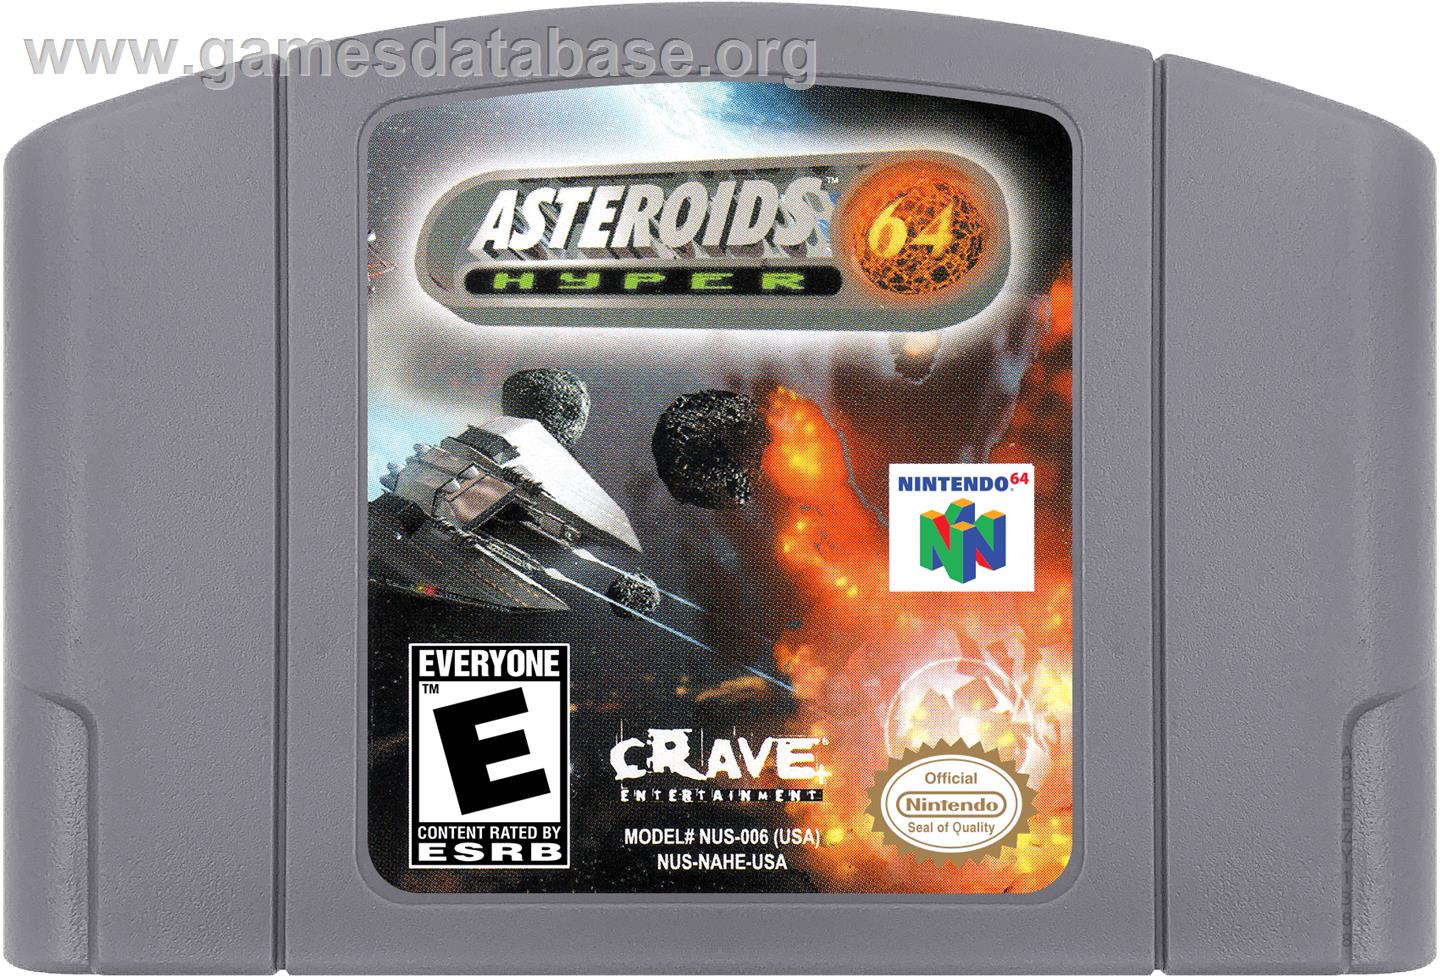 Asteroids Hyper 64 - Nintendo N64 - Artwork - Cartridge